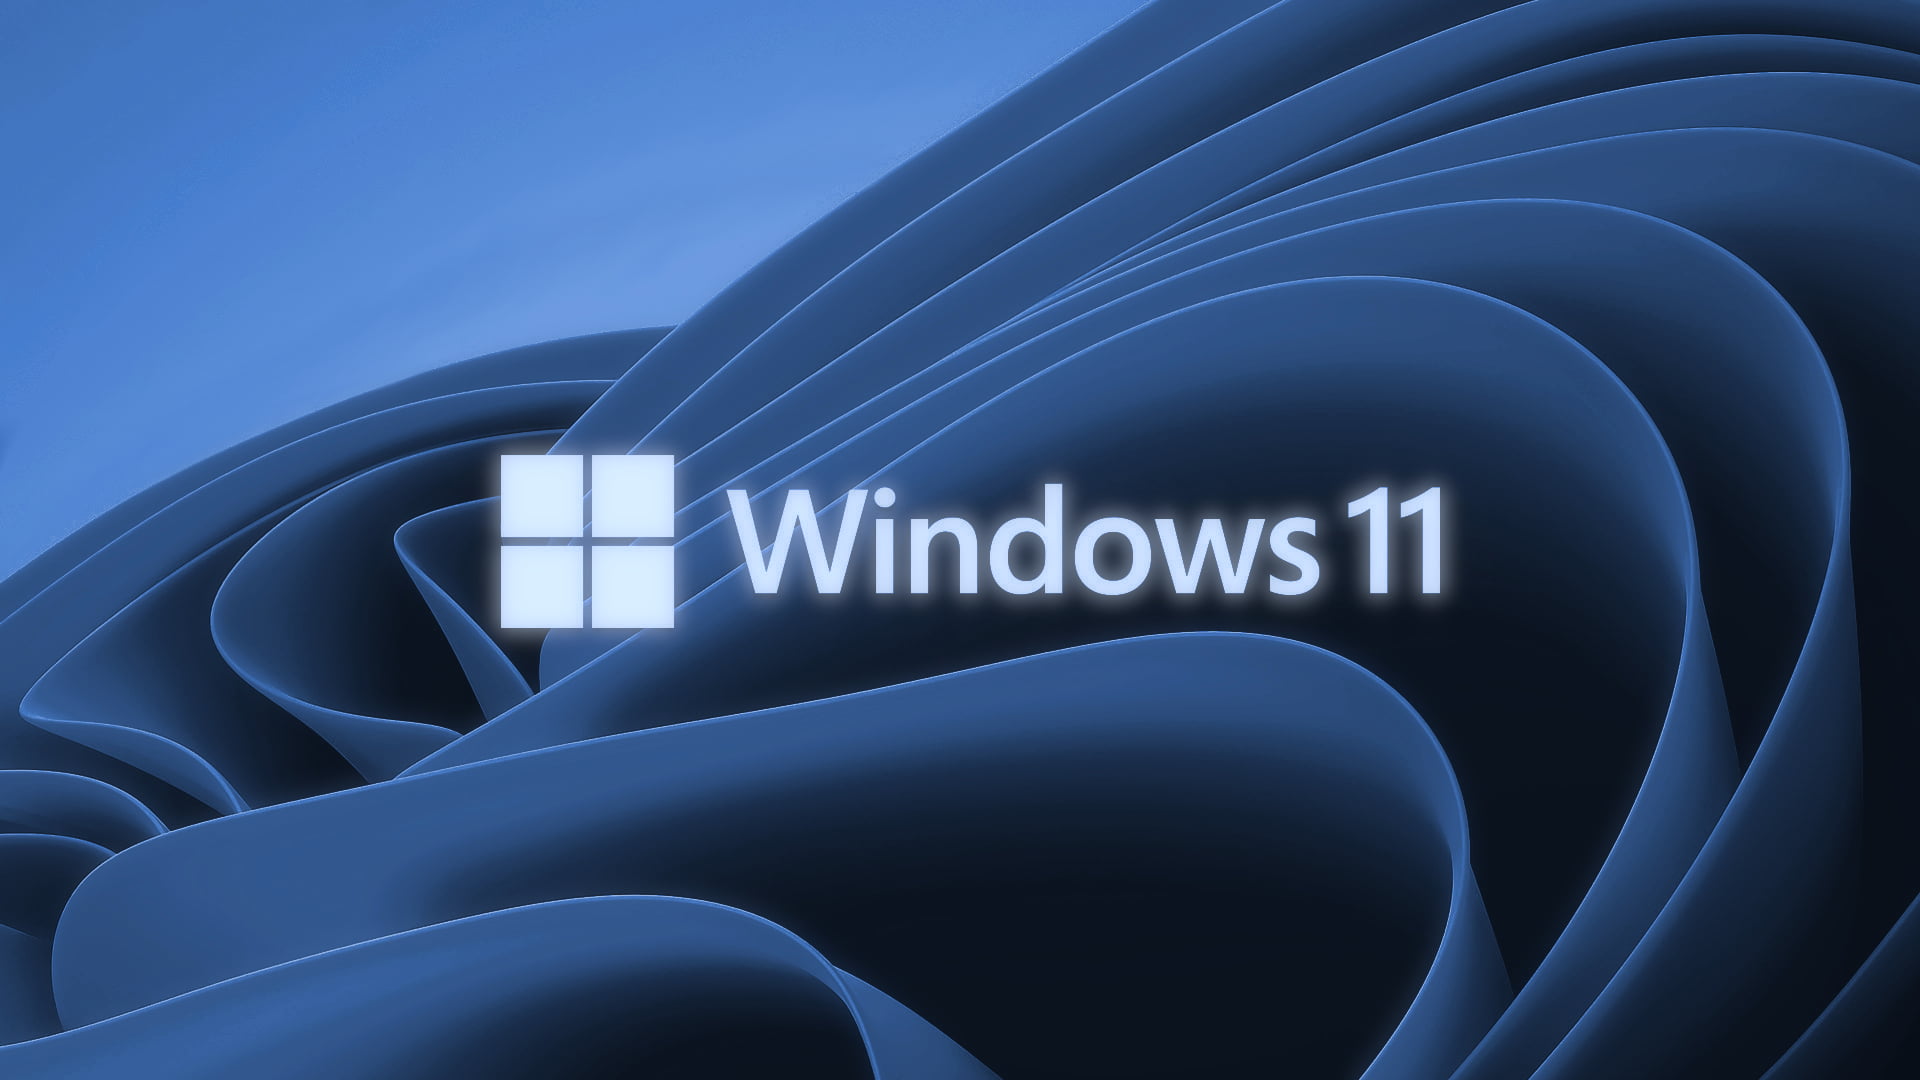 windows 11, simple, Microsoft, operating system, windows logo